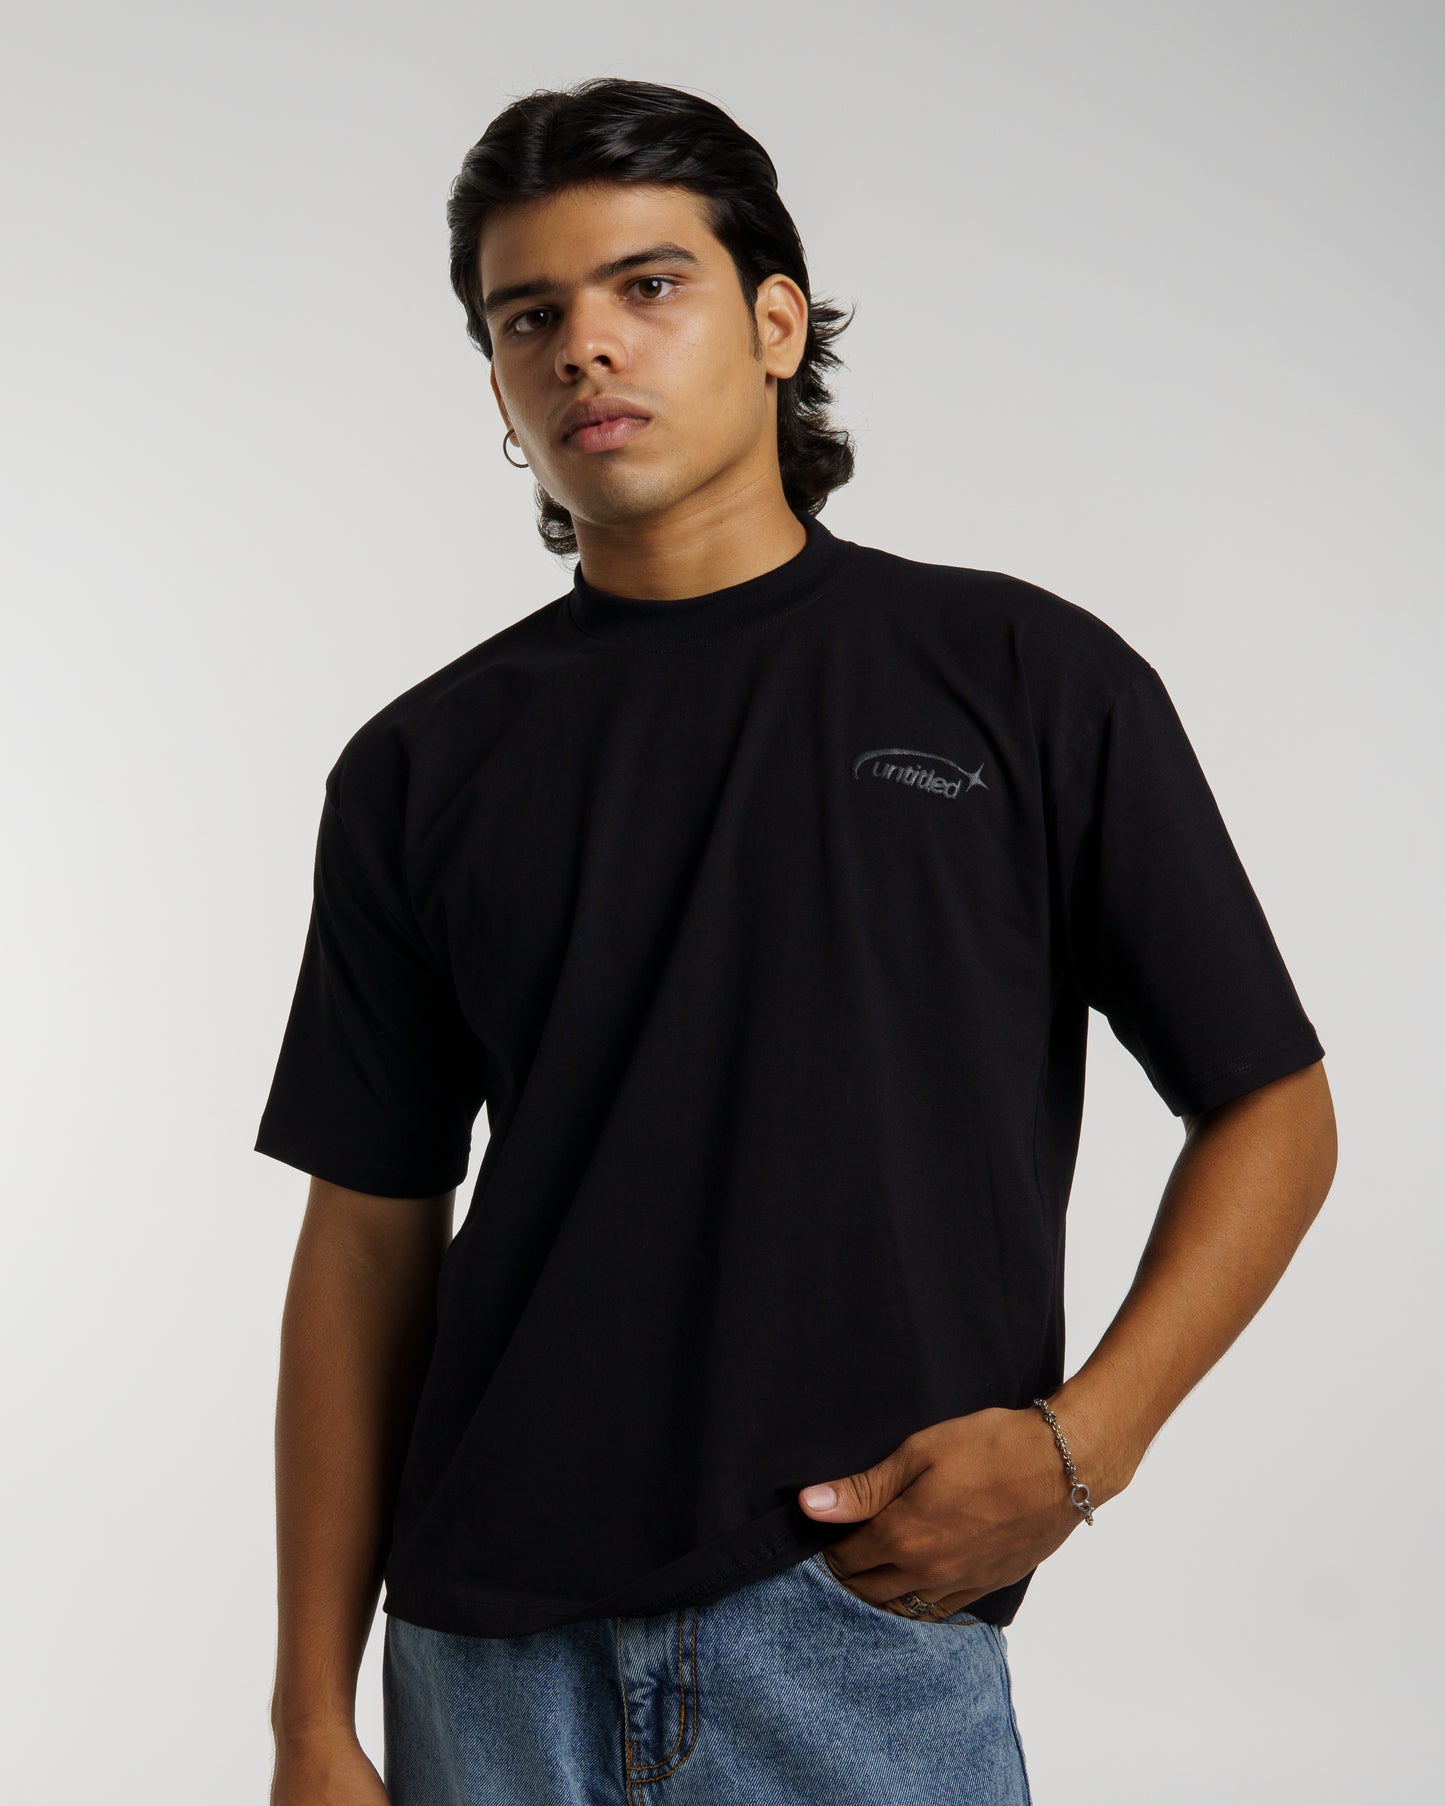 Cropped T-shirt (Black)